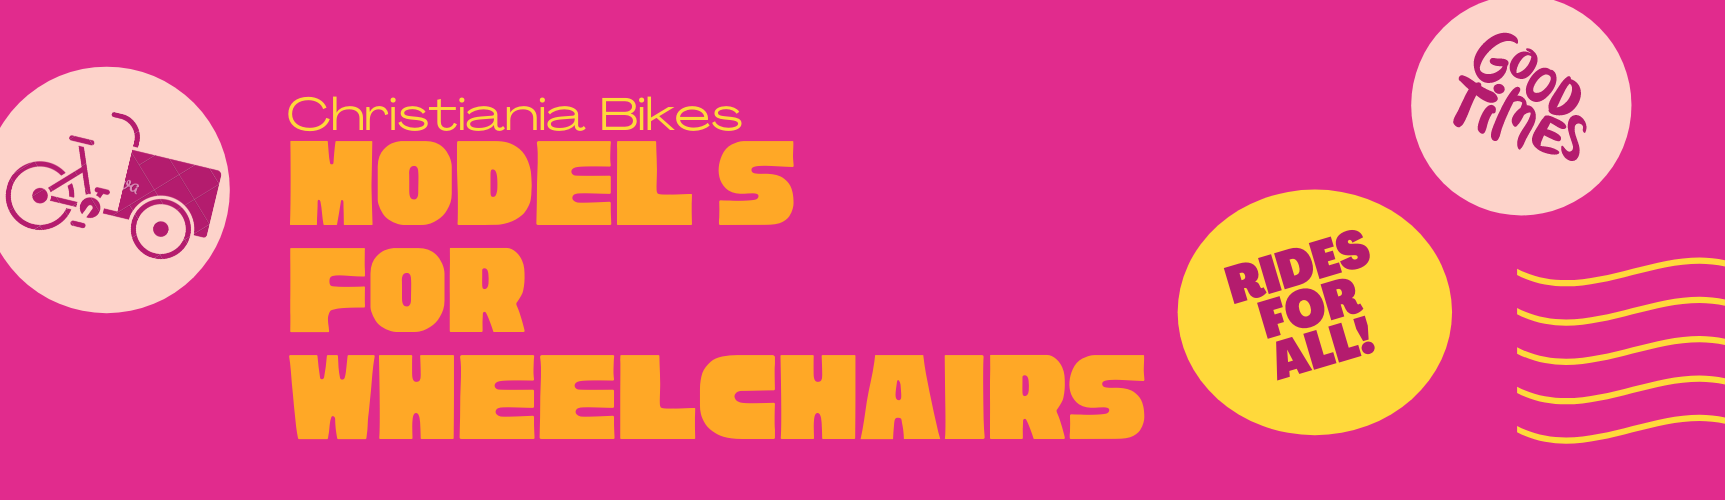 Wheelchair Riders and Christiania Bikes